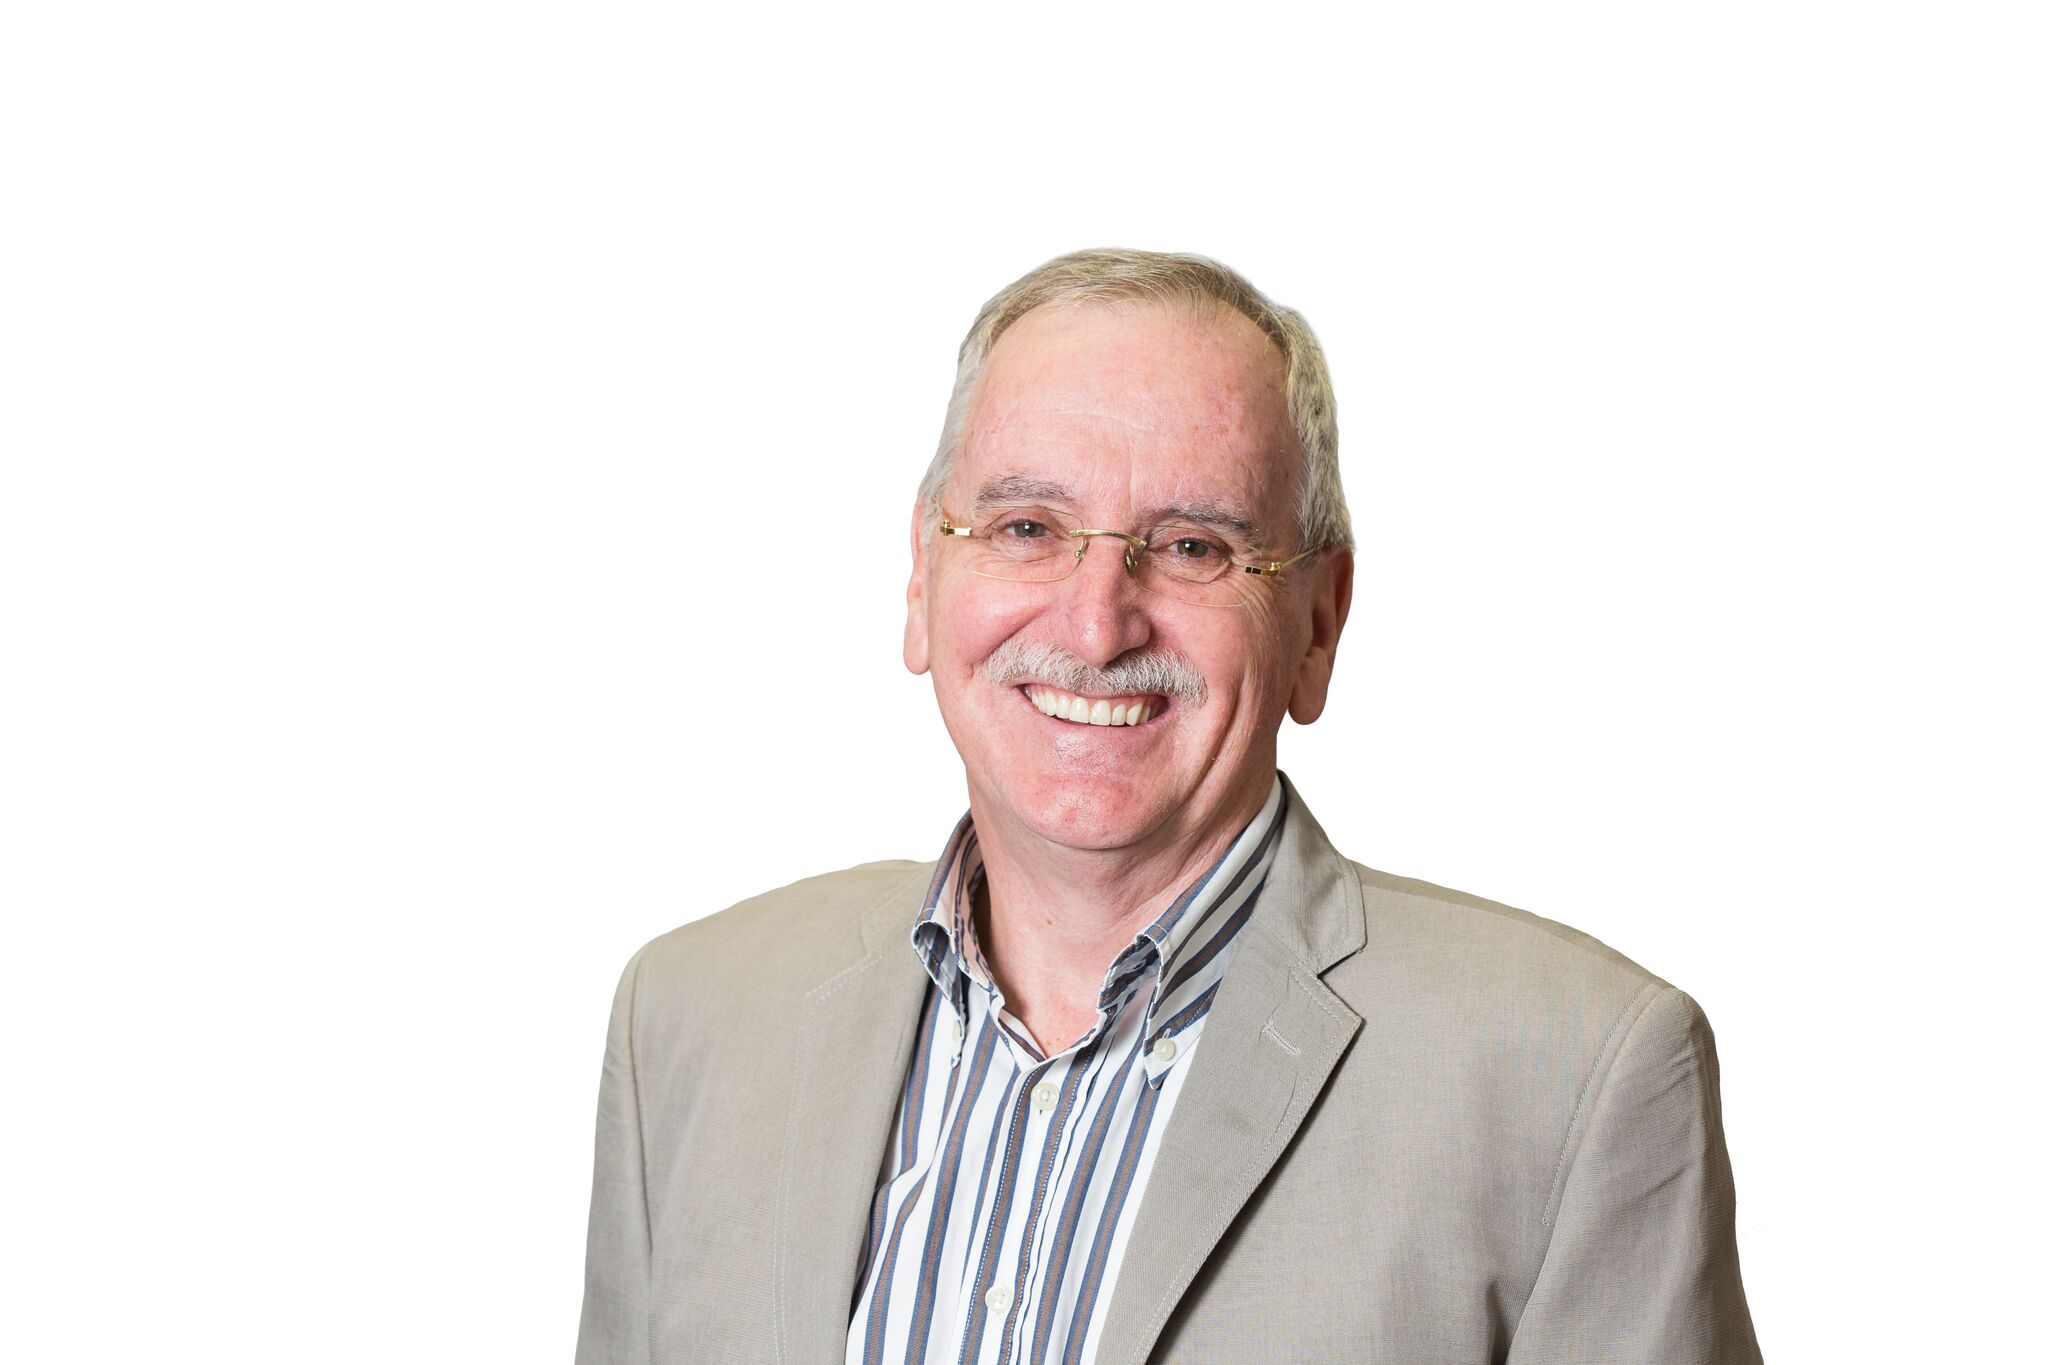 John Haines, leading expert on closing the sudden cardiac arrest survival gap